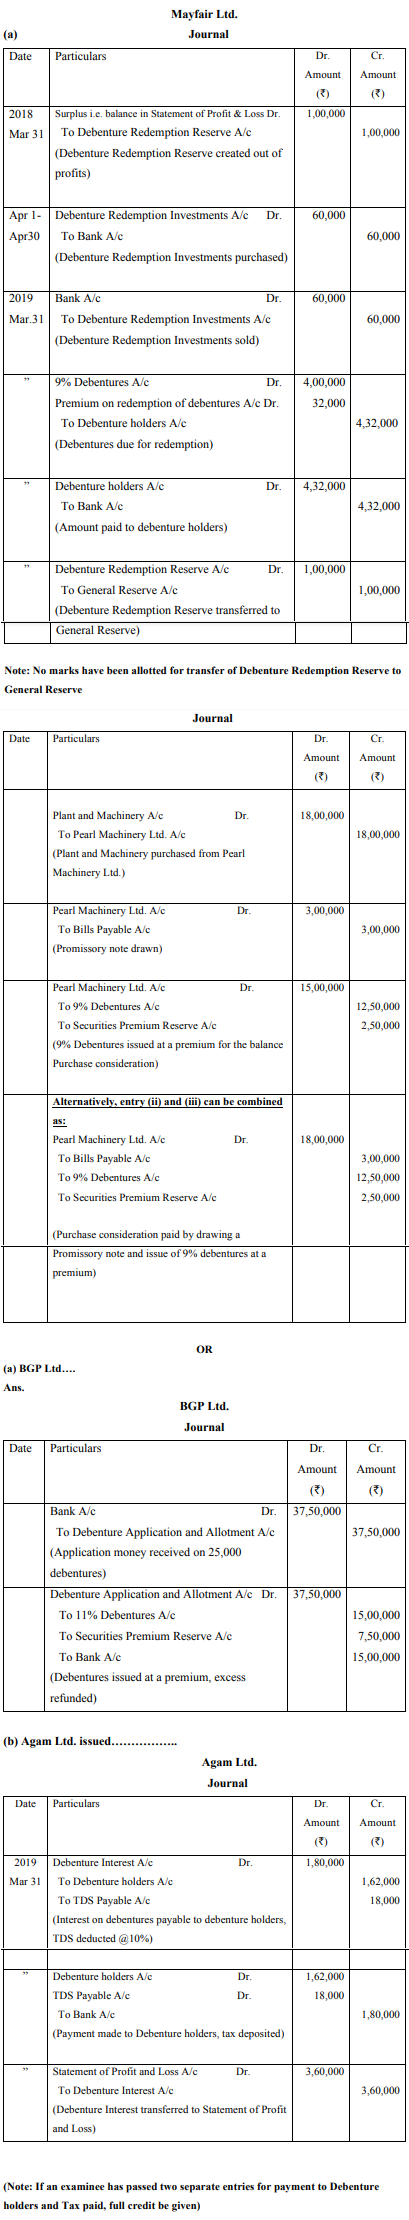 On 1st April, 2015, Mayfair Ltd. issued 4,000 9% debentures of ` 100 